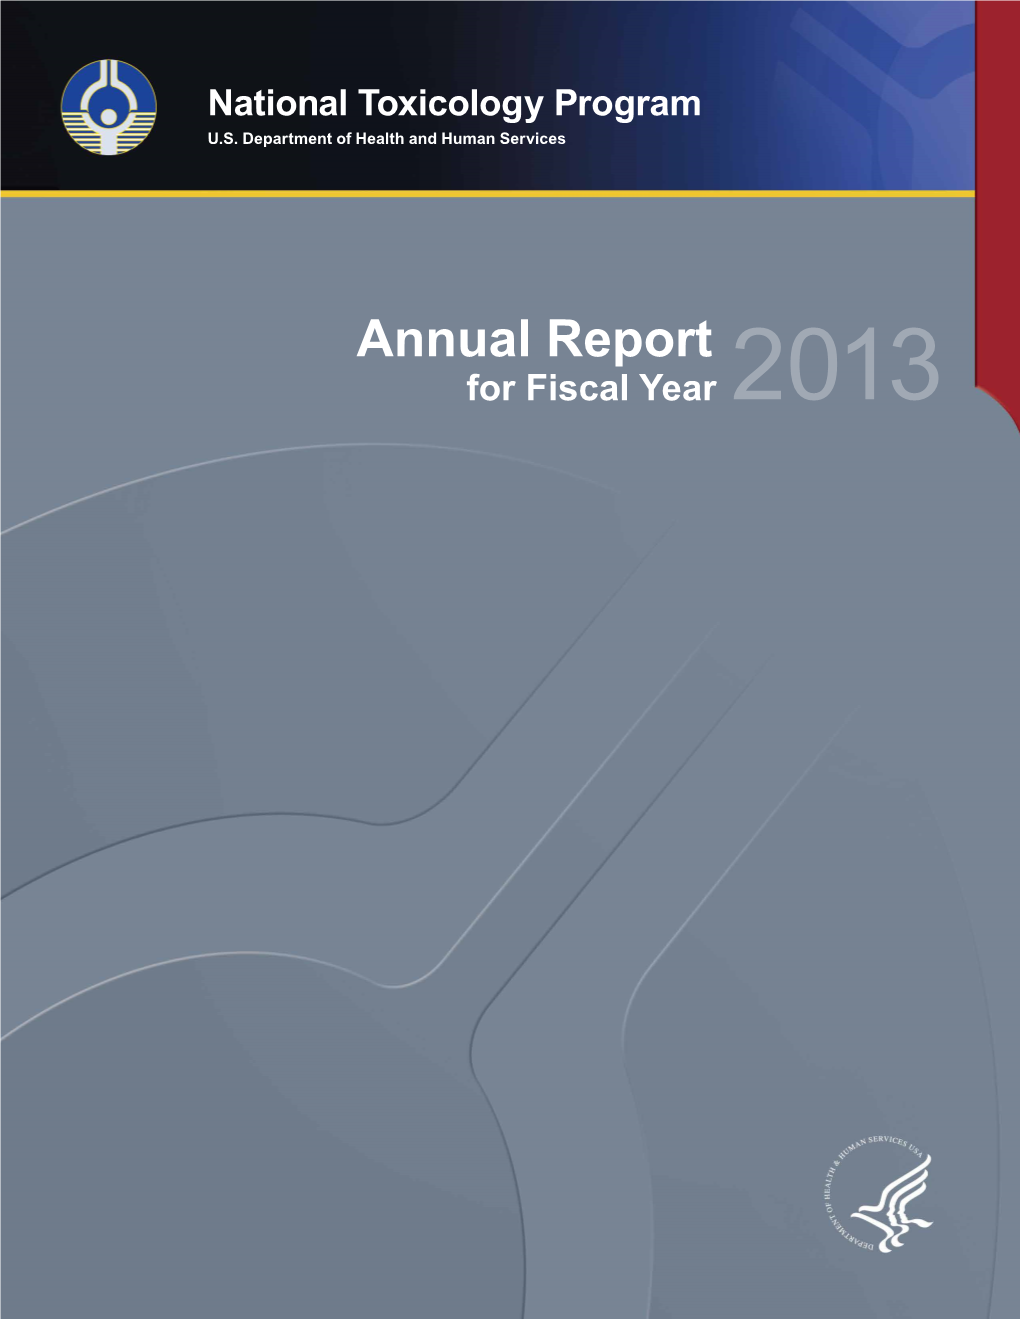 NTP Annual Report 2013